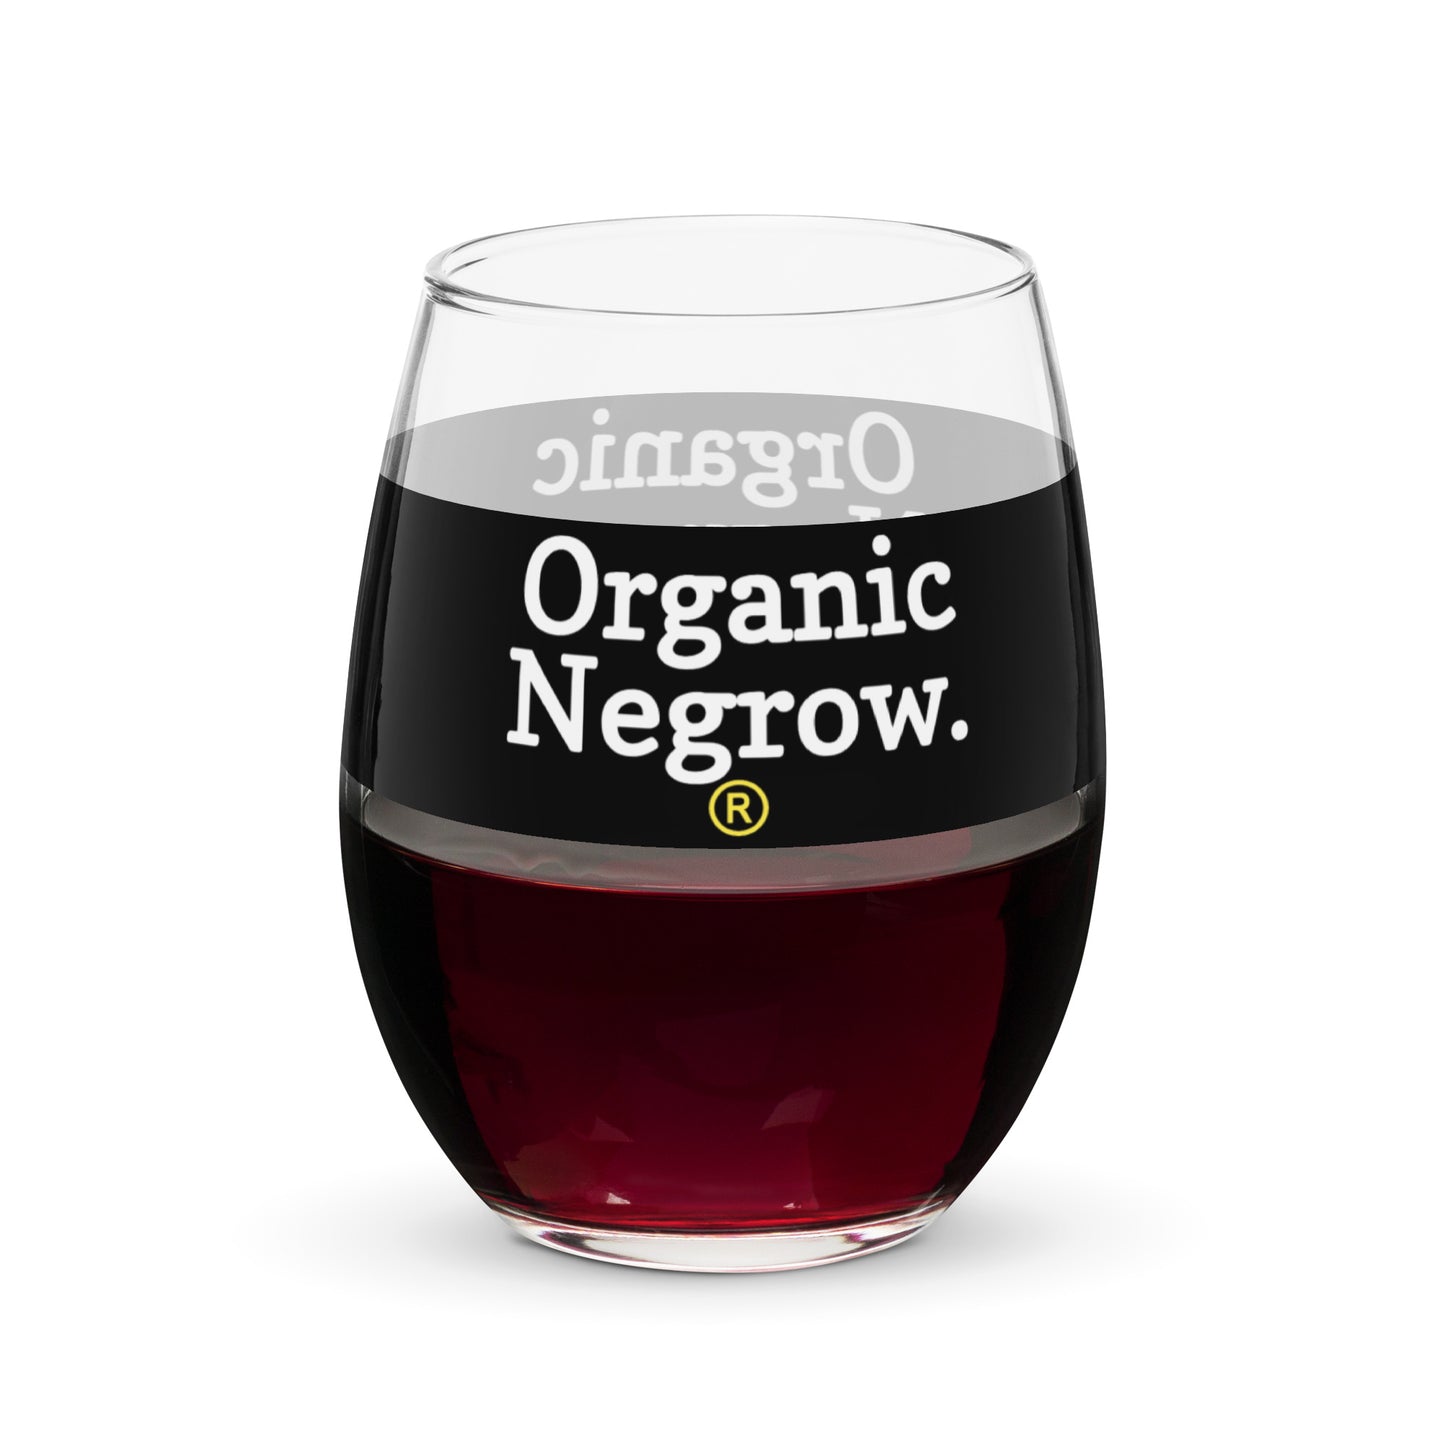 Organic Negrow Wine Glass / Kyrie Irving / Stemless wine glass